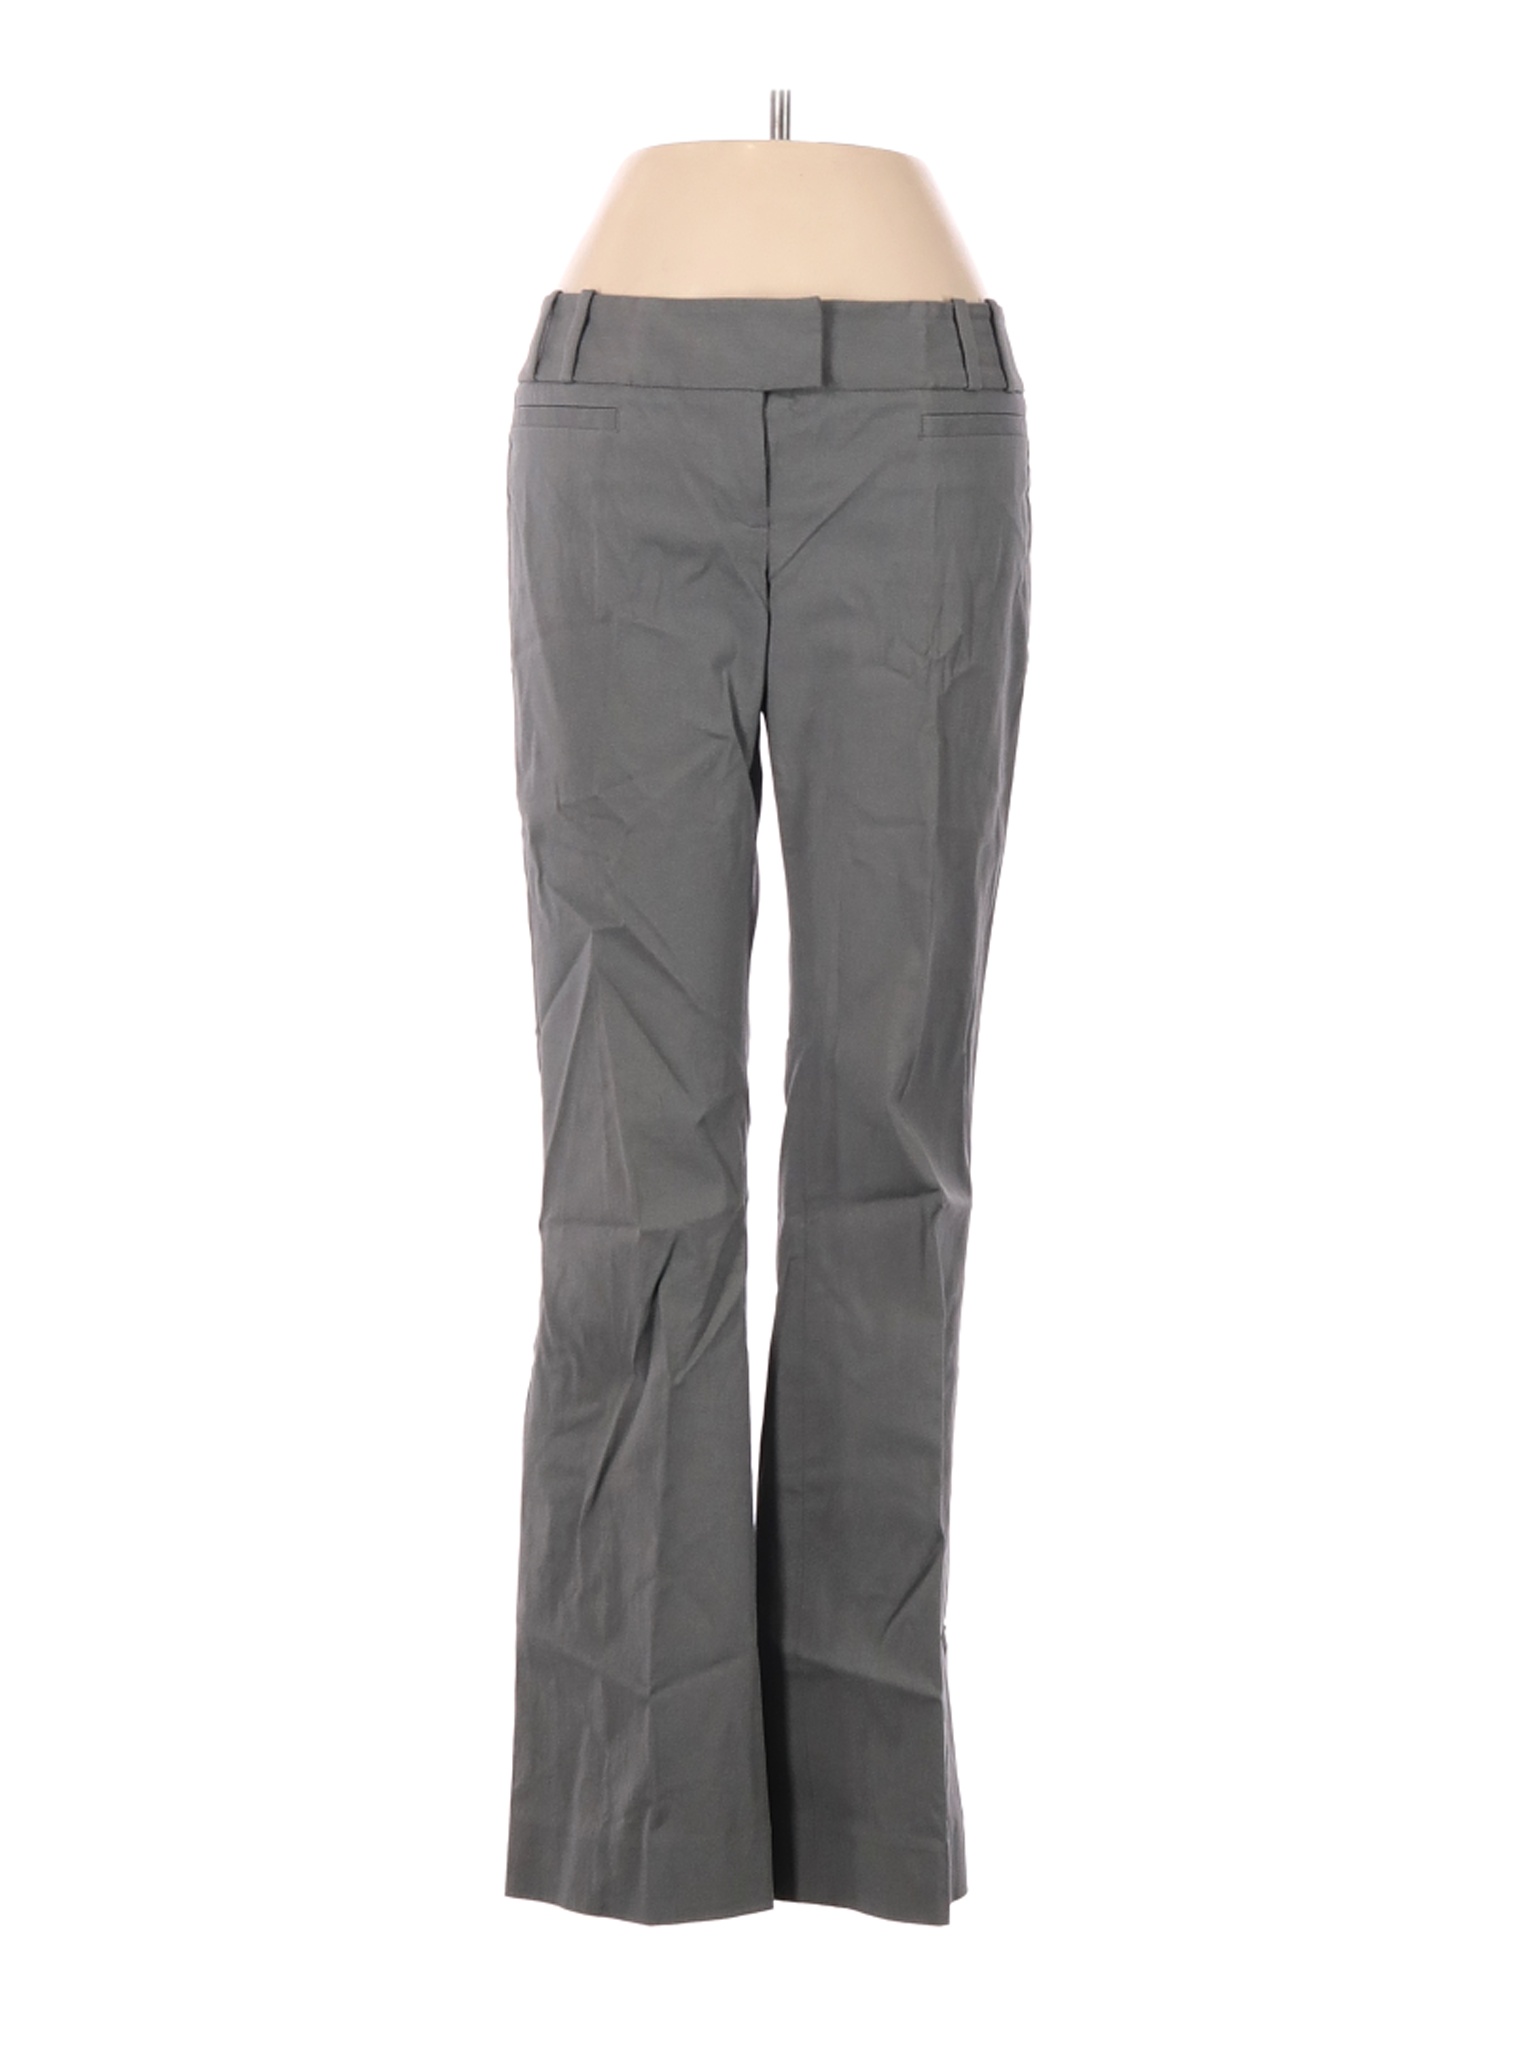 The Limited Women Gray Dress Pants 0 Petites | eBay